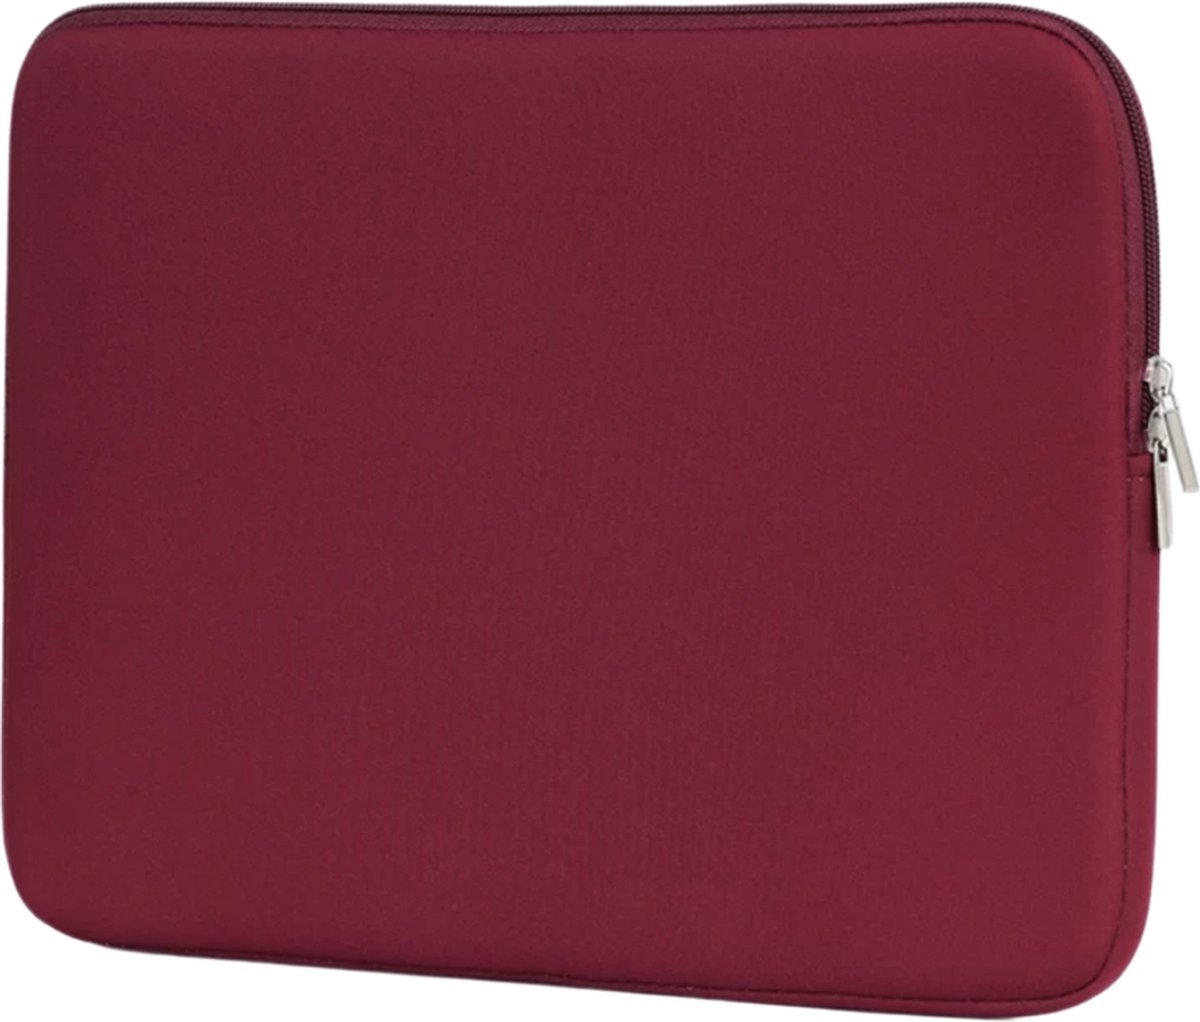 Dunne laptopsleeve – verschillende laptops – 15,6 inch - bordeaux rood- Schokproof - Dubbele Ritssluiting